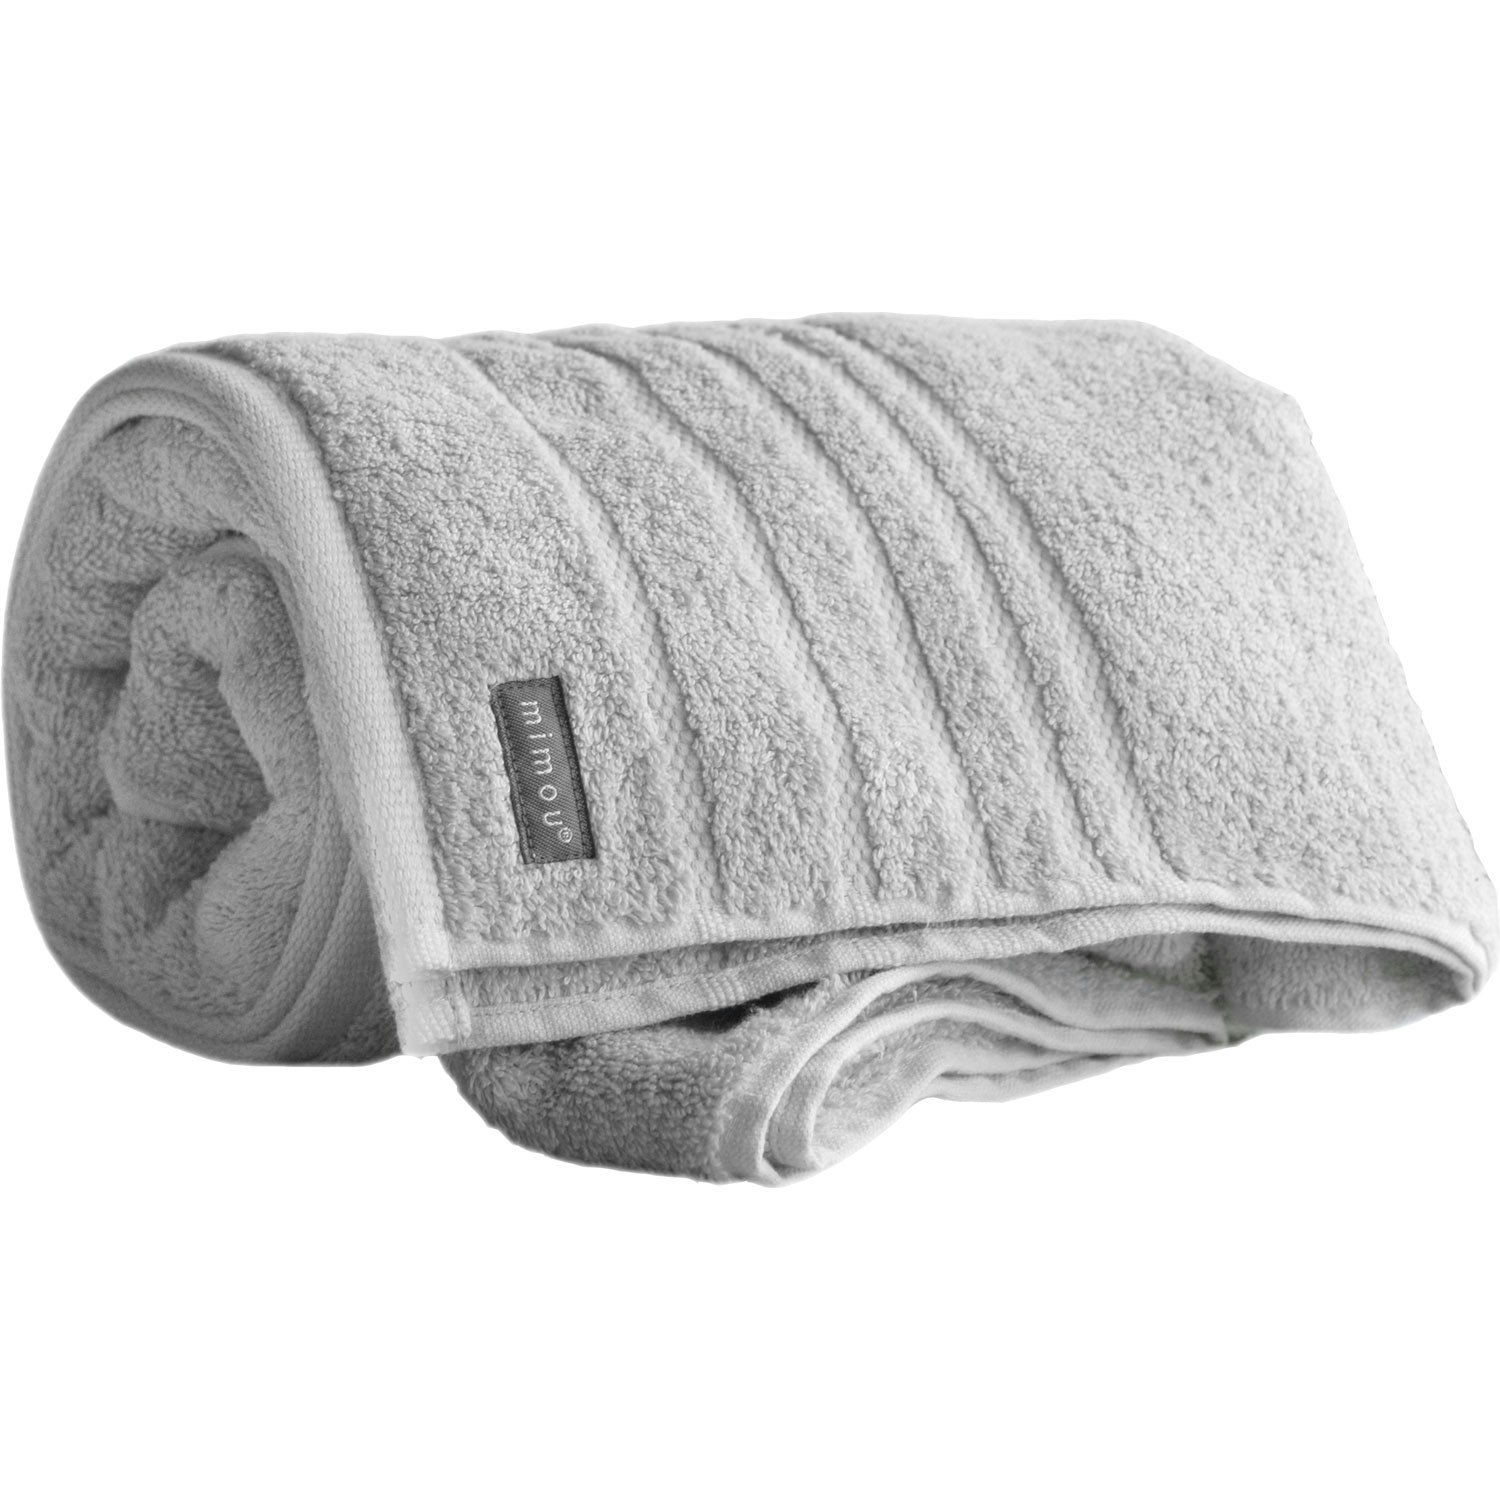 https://royaldesign.com/image/10/mimou-devon-bath-towel-70x140-cm-5